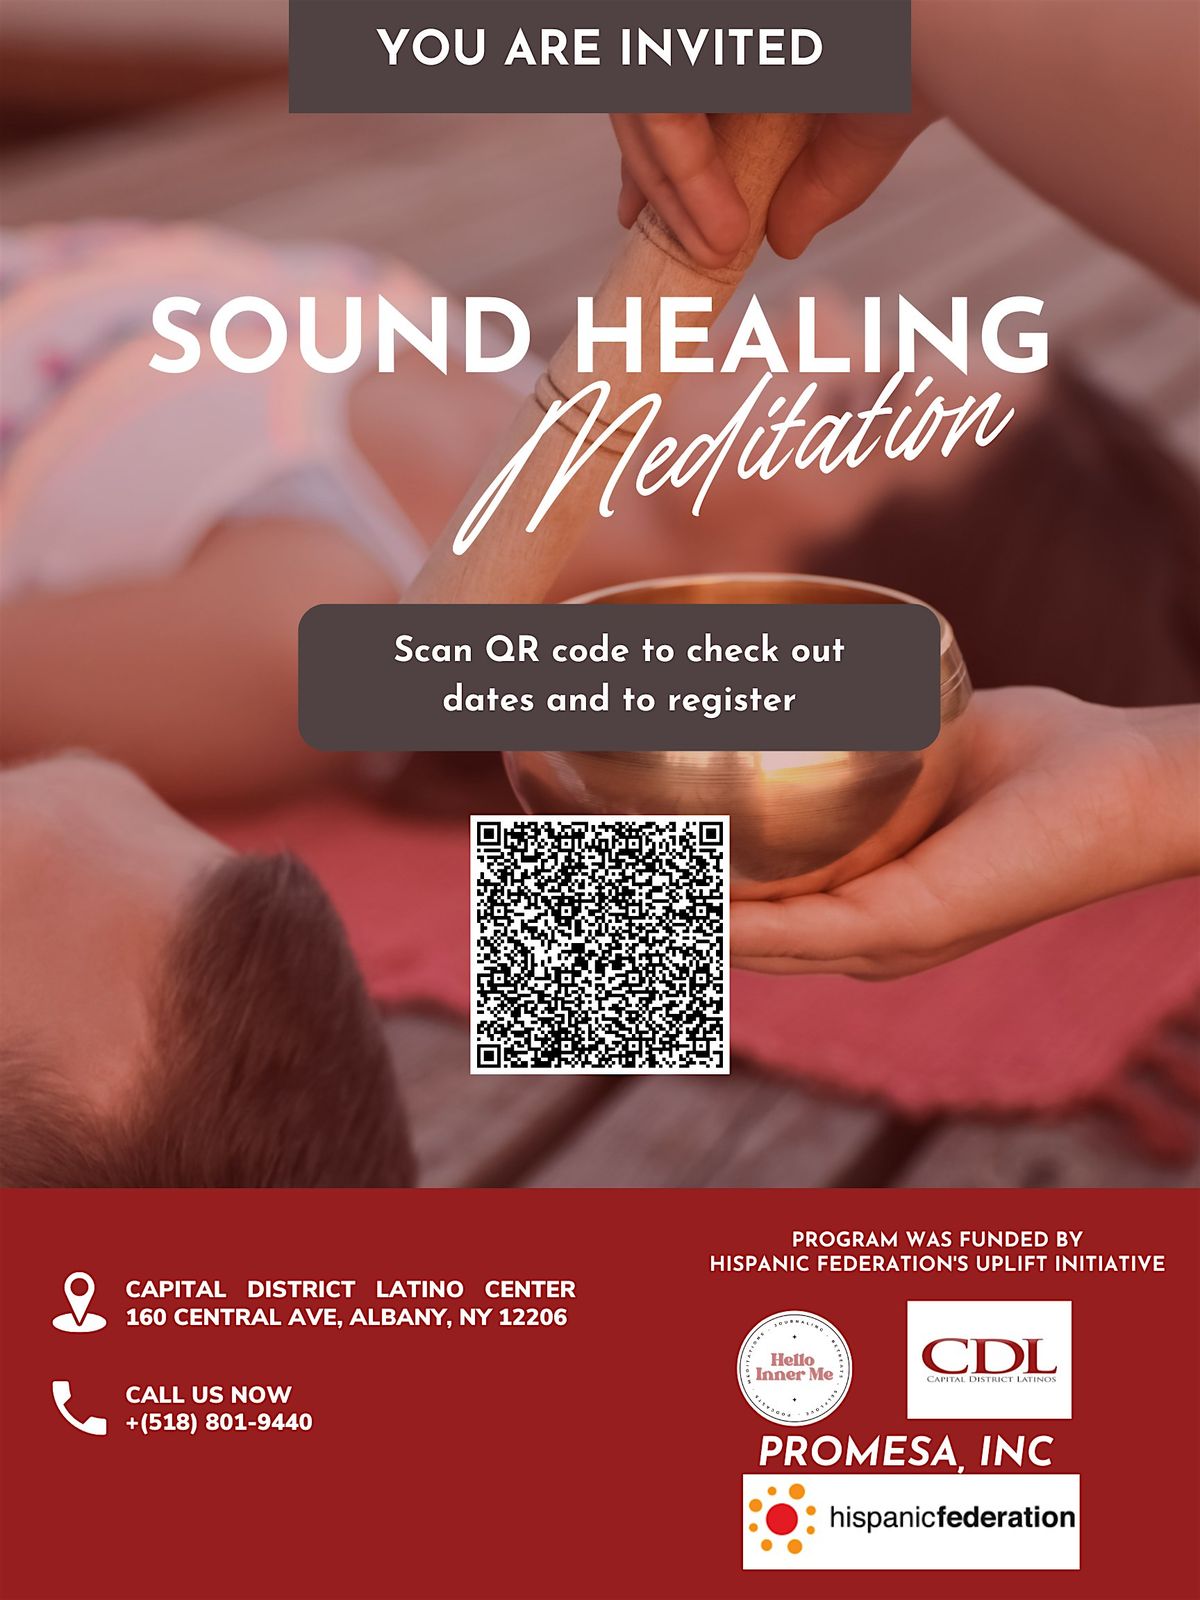 Sound Healing Meditation